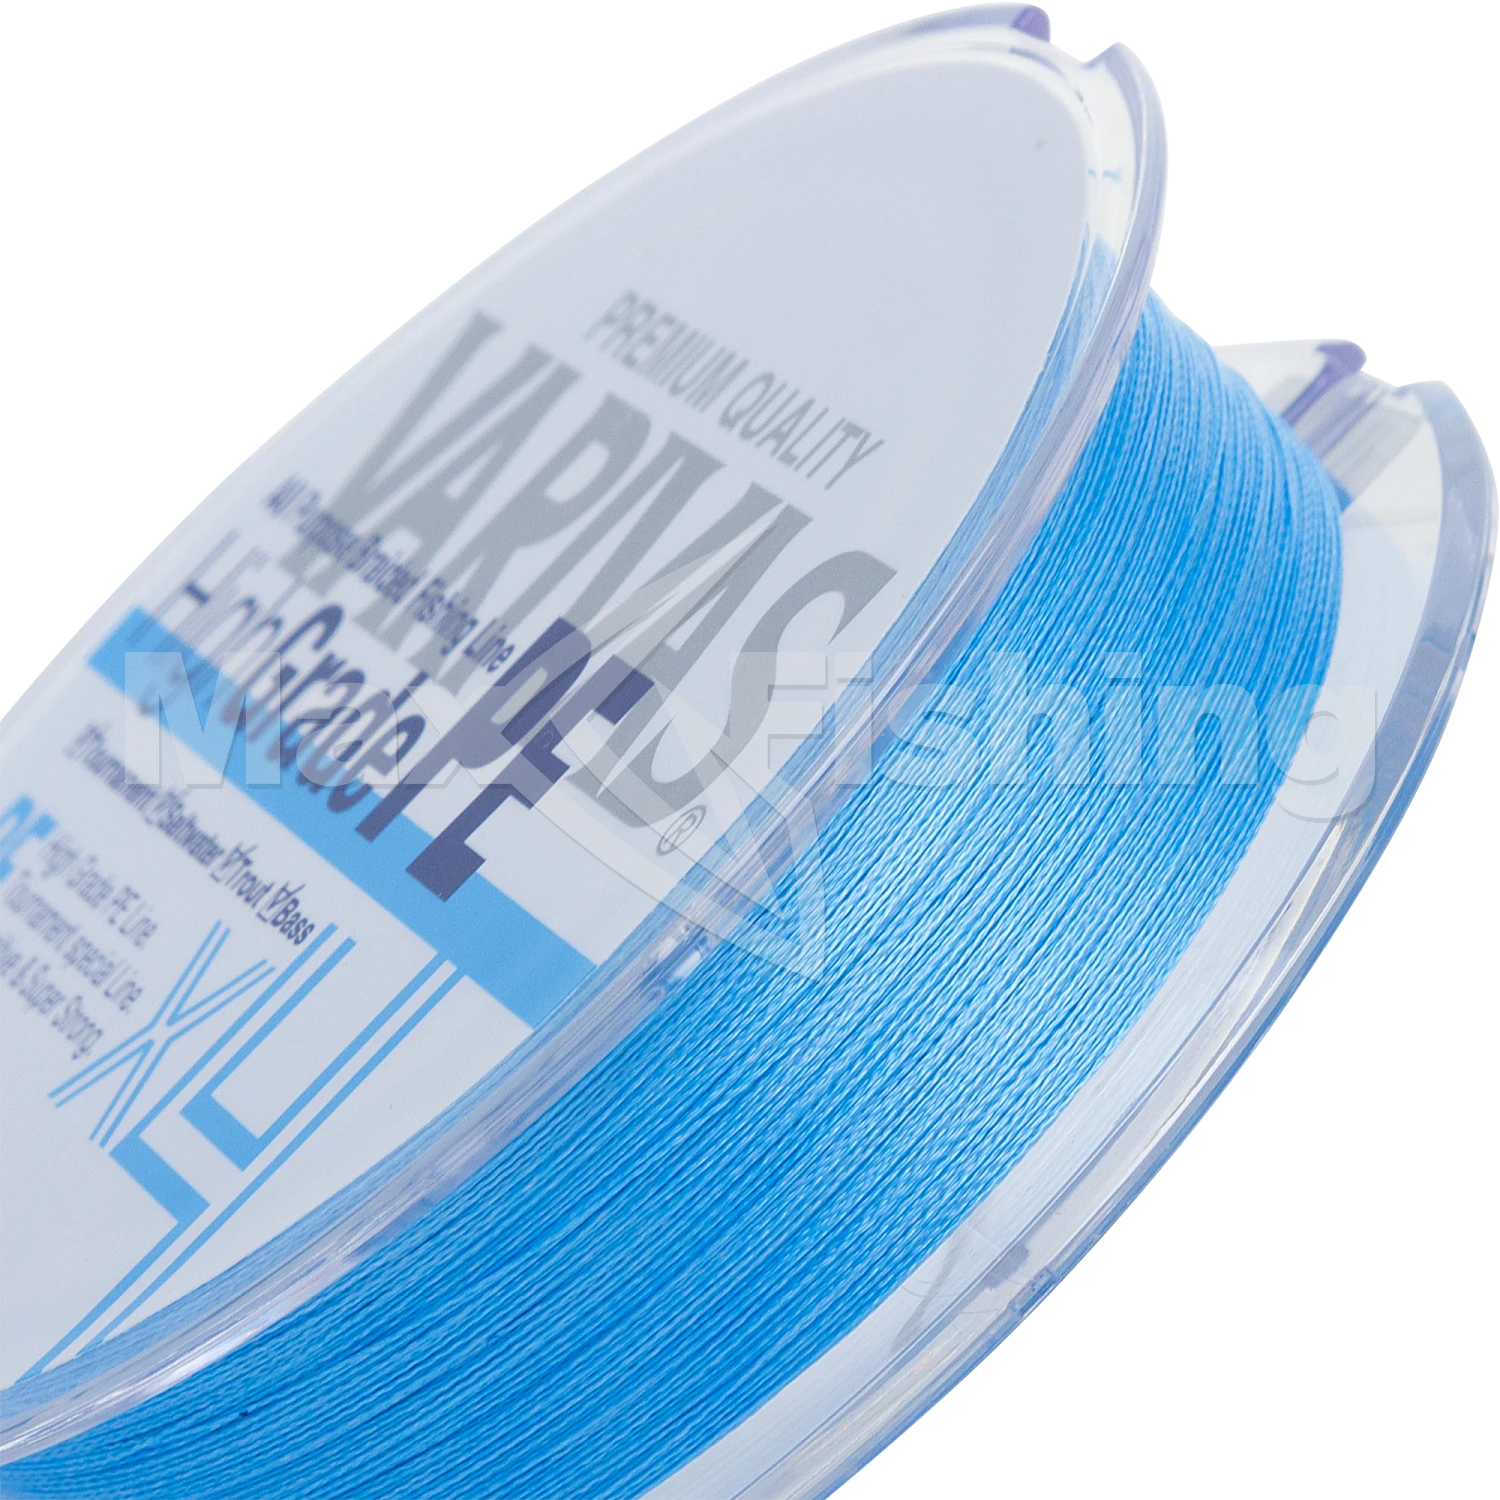 Шнур плетеный Varivas High Grade PE X4 #1,2 0,185мм 150м (water blue)